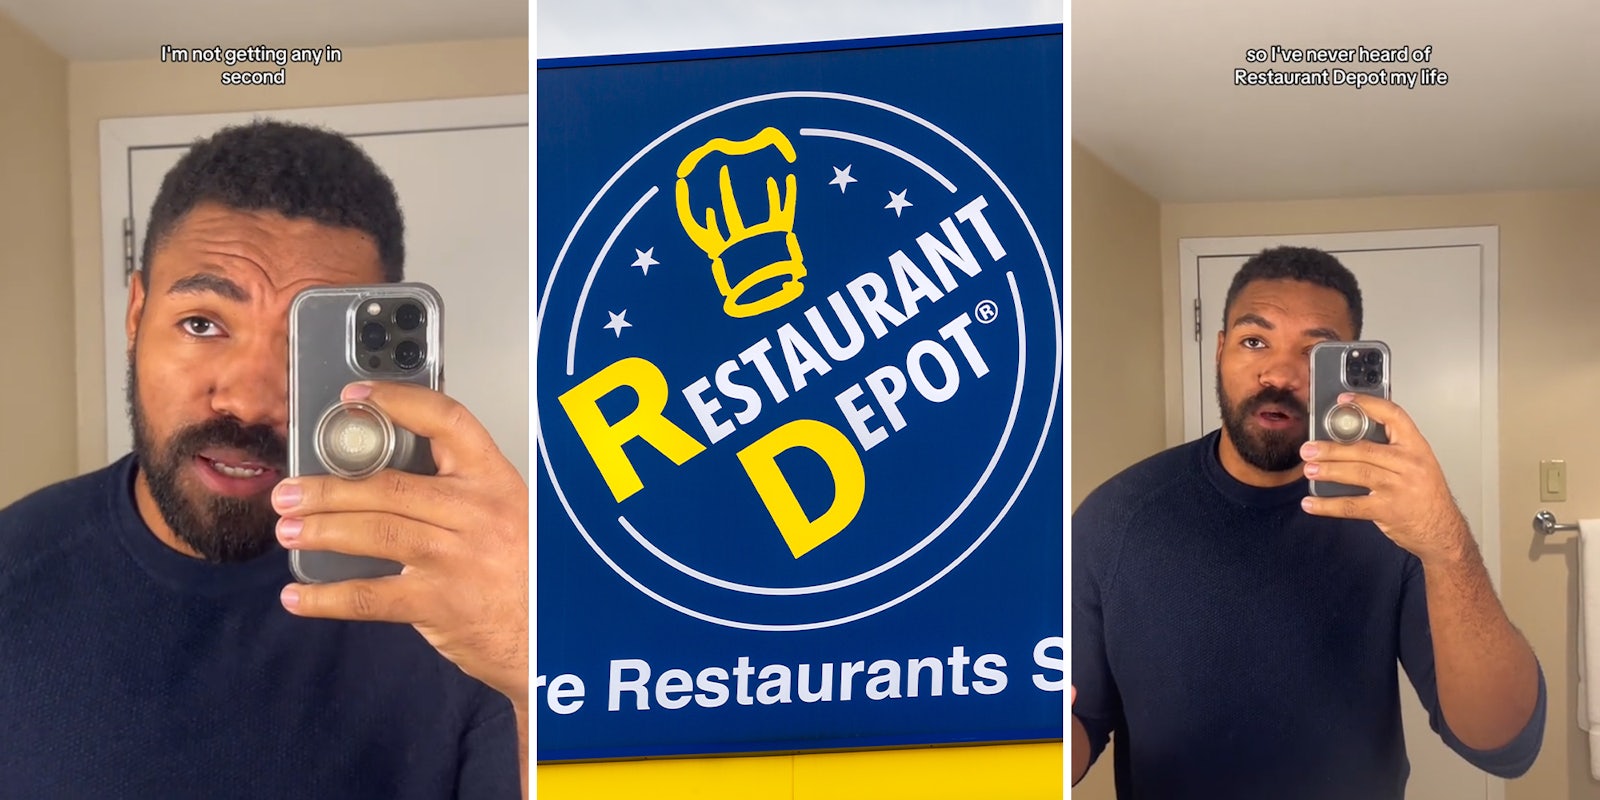 Fast food expert reveals you can get a Restaurant Depot day pass